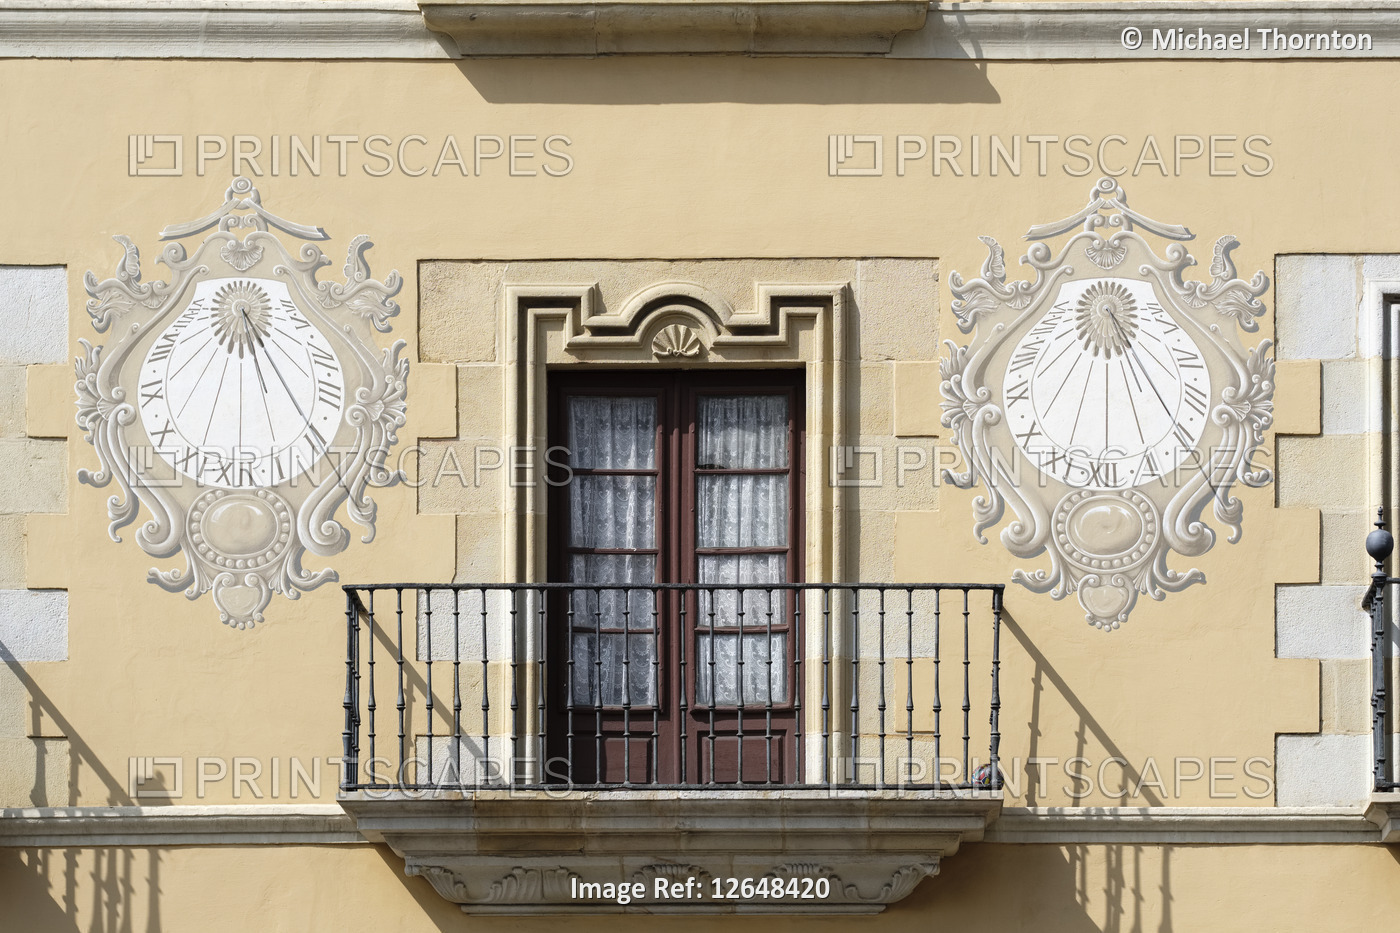 Sun Dials either side of upstairs balcony, Durango, Vizcaya, Pais Vasco, Spain,